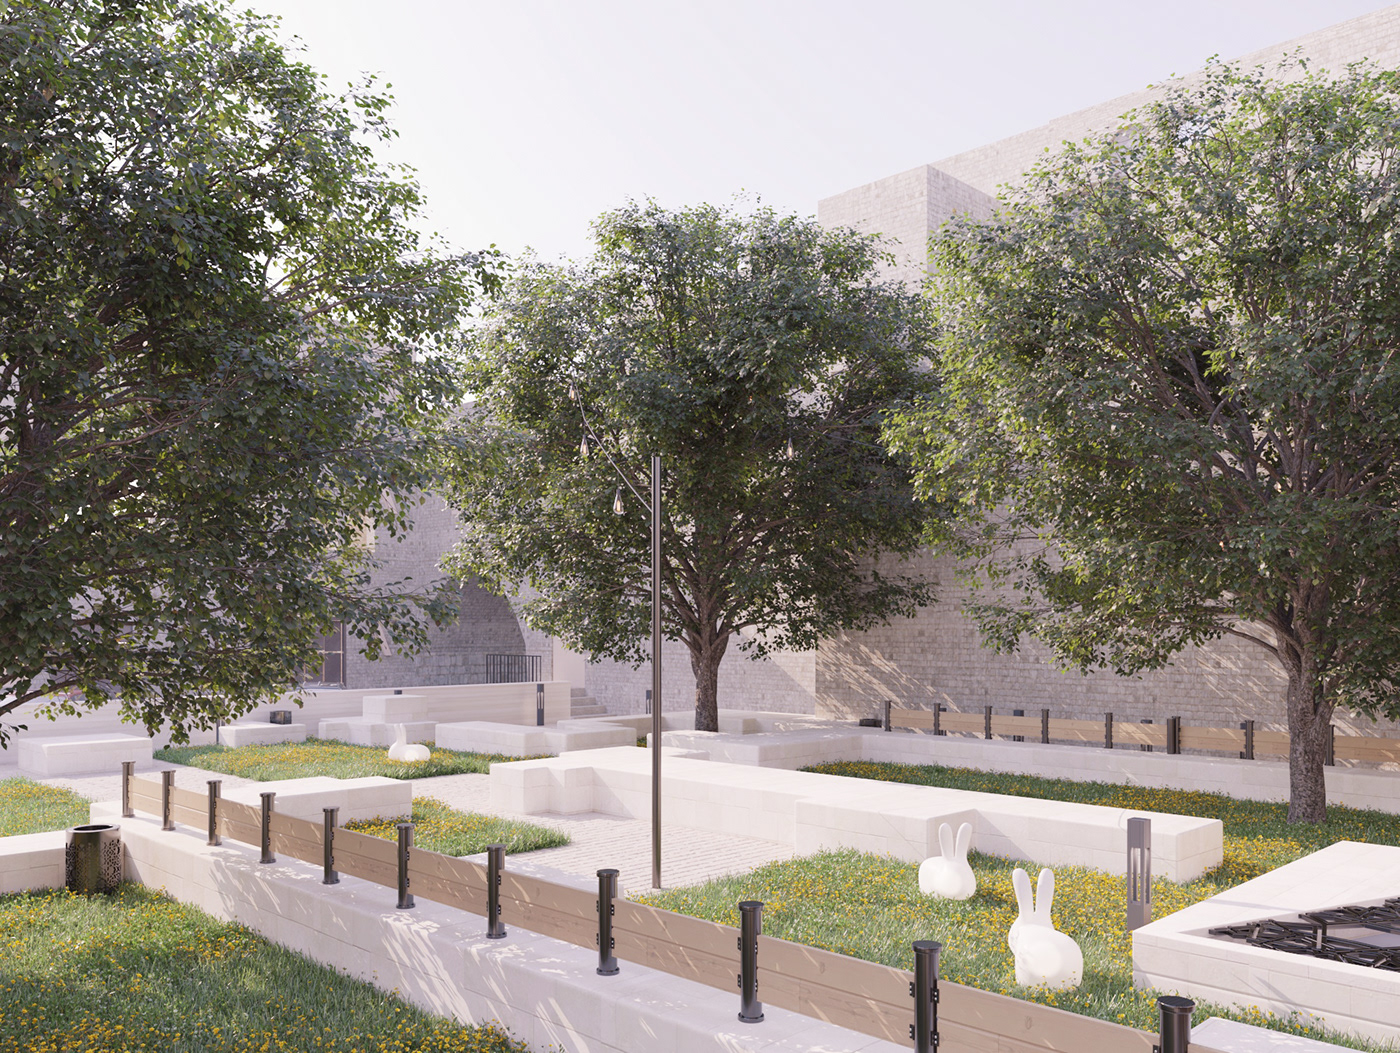 3ds max corona render  exterior garden interior design  Landscape Architecture  landscaping Render square Urban Design